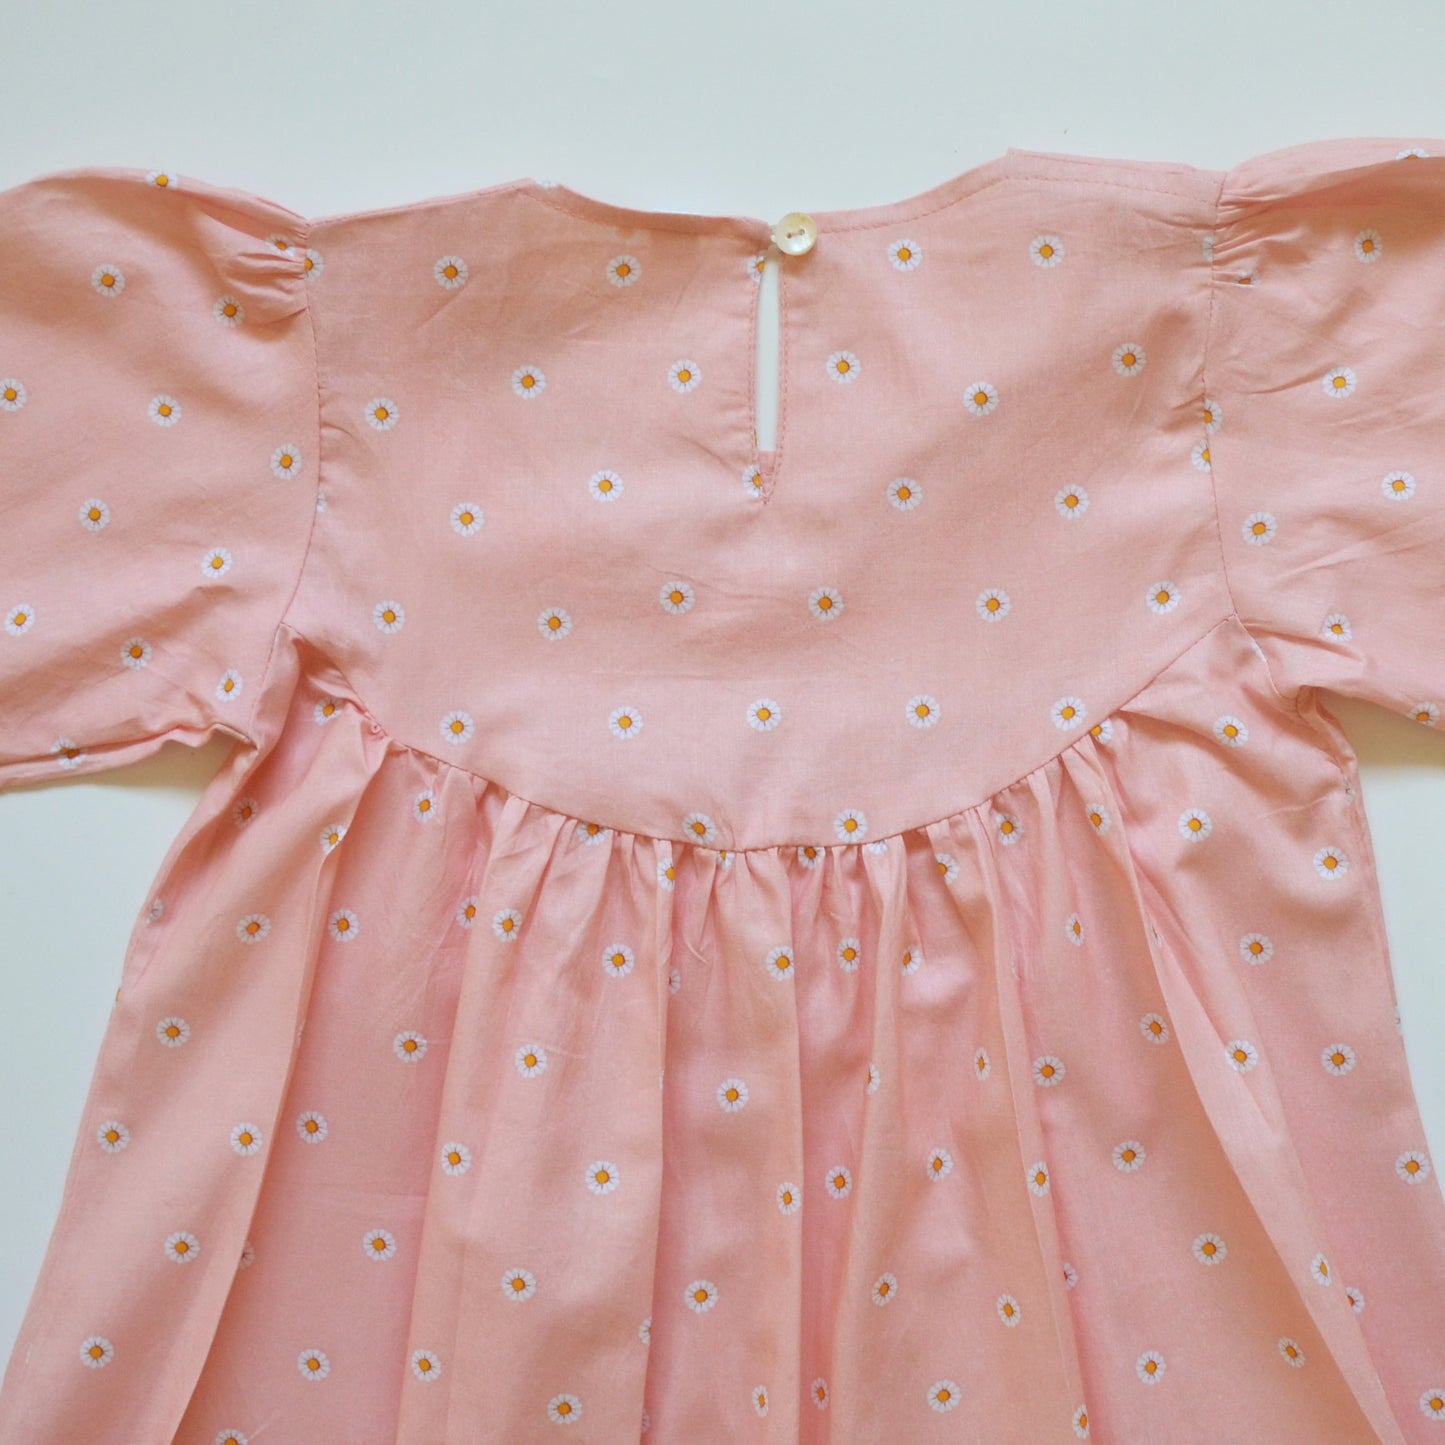 Hermione dress in daisy print with a cute ribbon bow - Peach